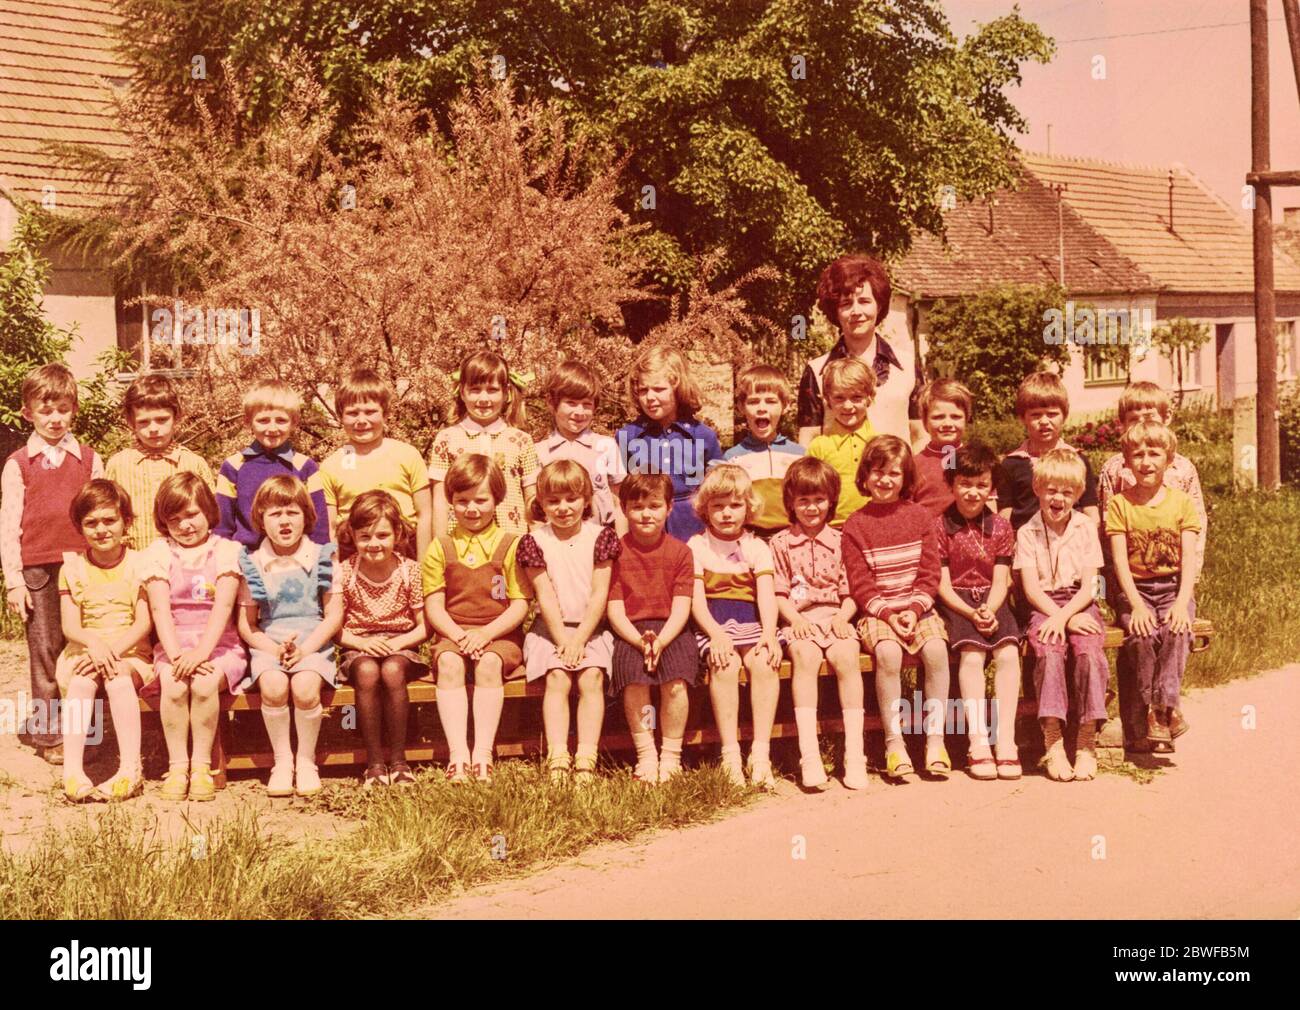 THE CZECHOSLOVAK SOCIALIST REPUBLIC - CIRCA 1980s: Retro photo shows pupils (schoolmates) and their female teacher. Color photo. Stock Photo